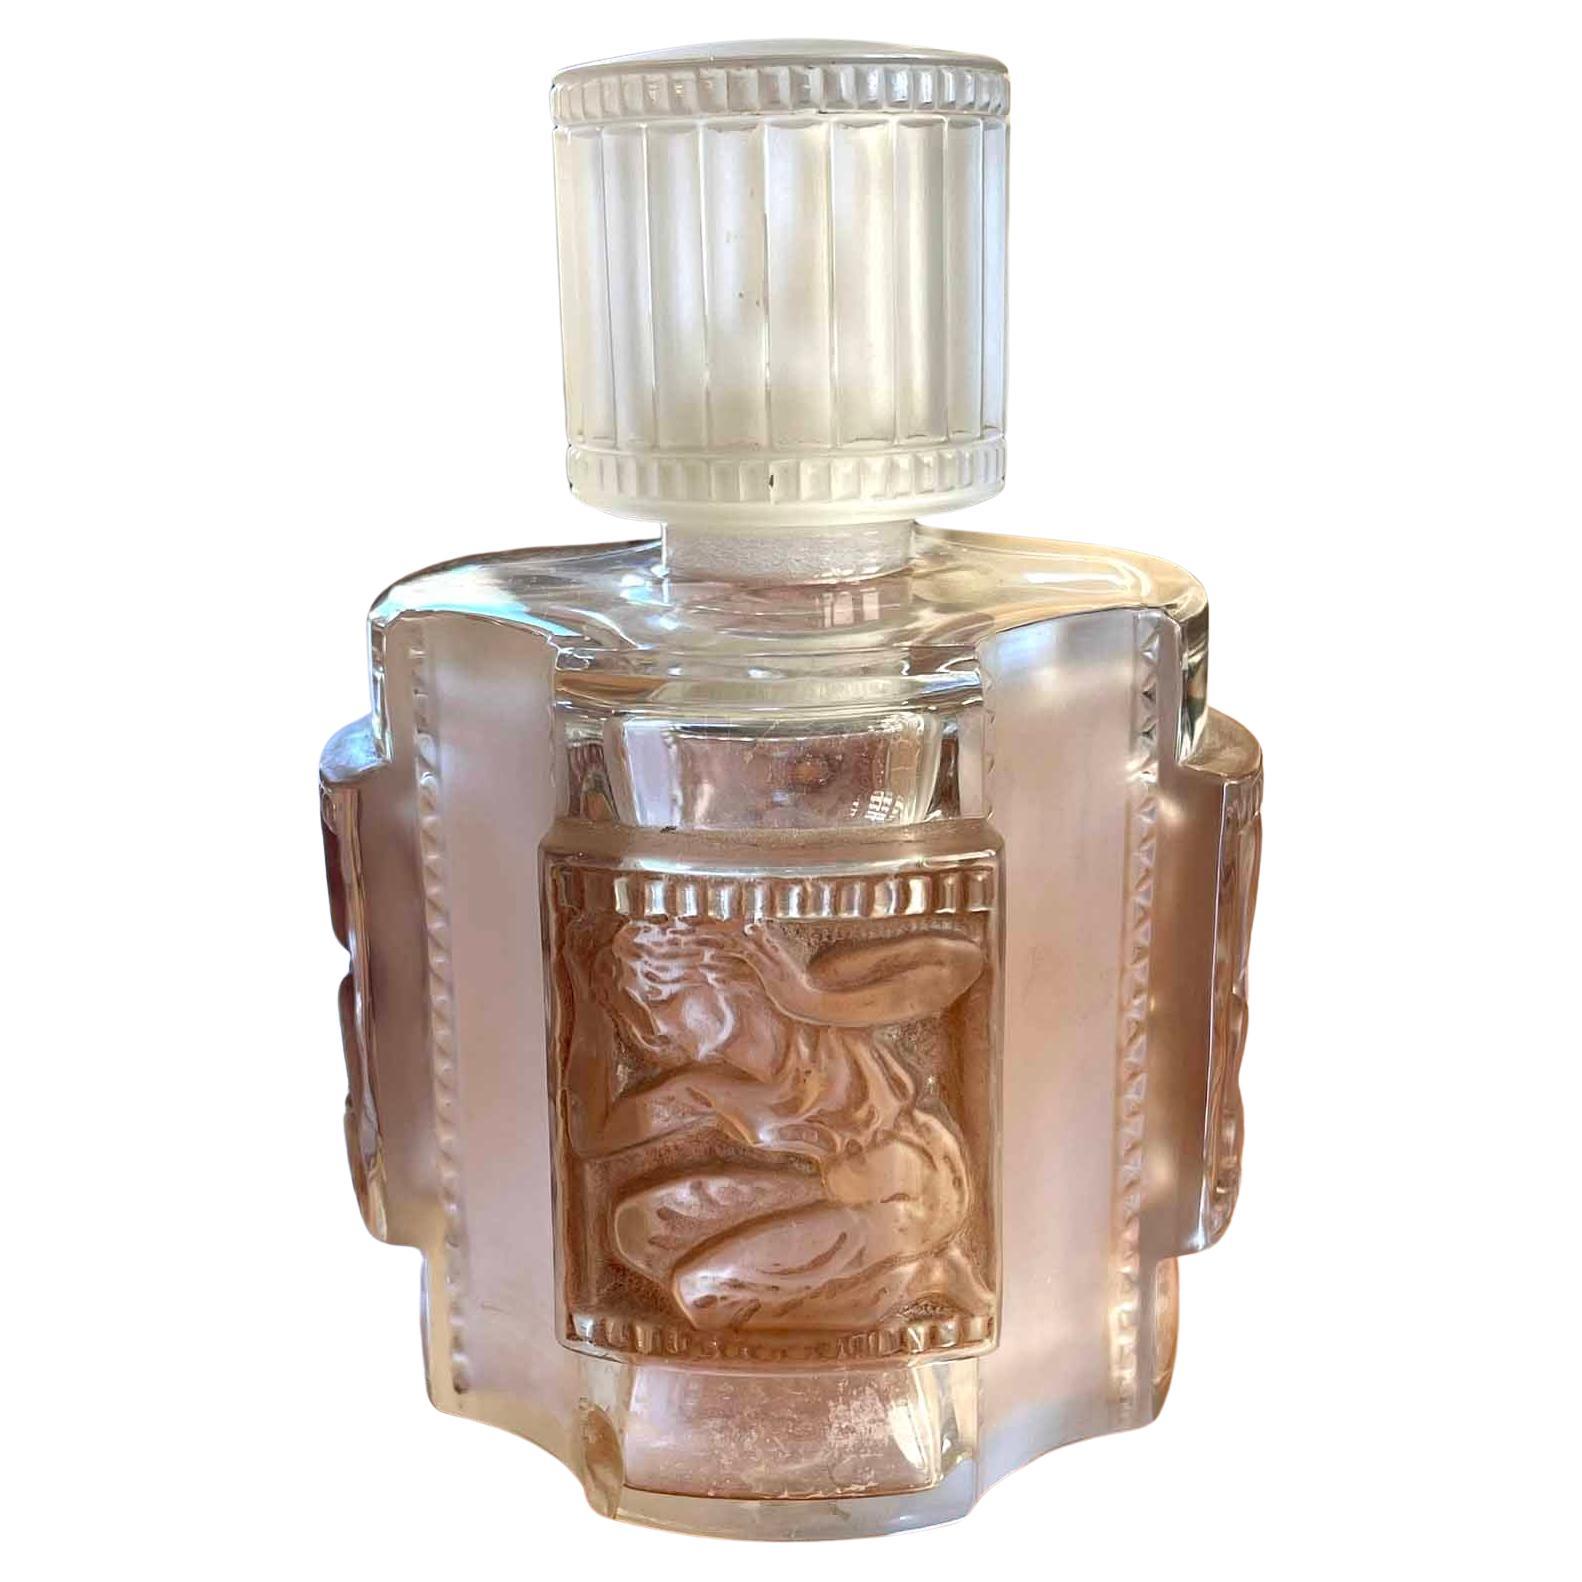 "Helene", 1942-Vintage Art Deco Perfume Bottle by René Lalique